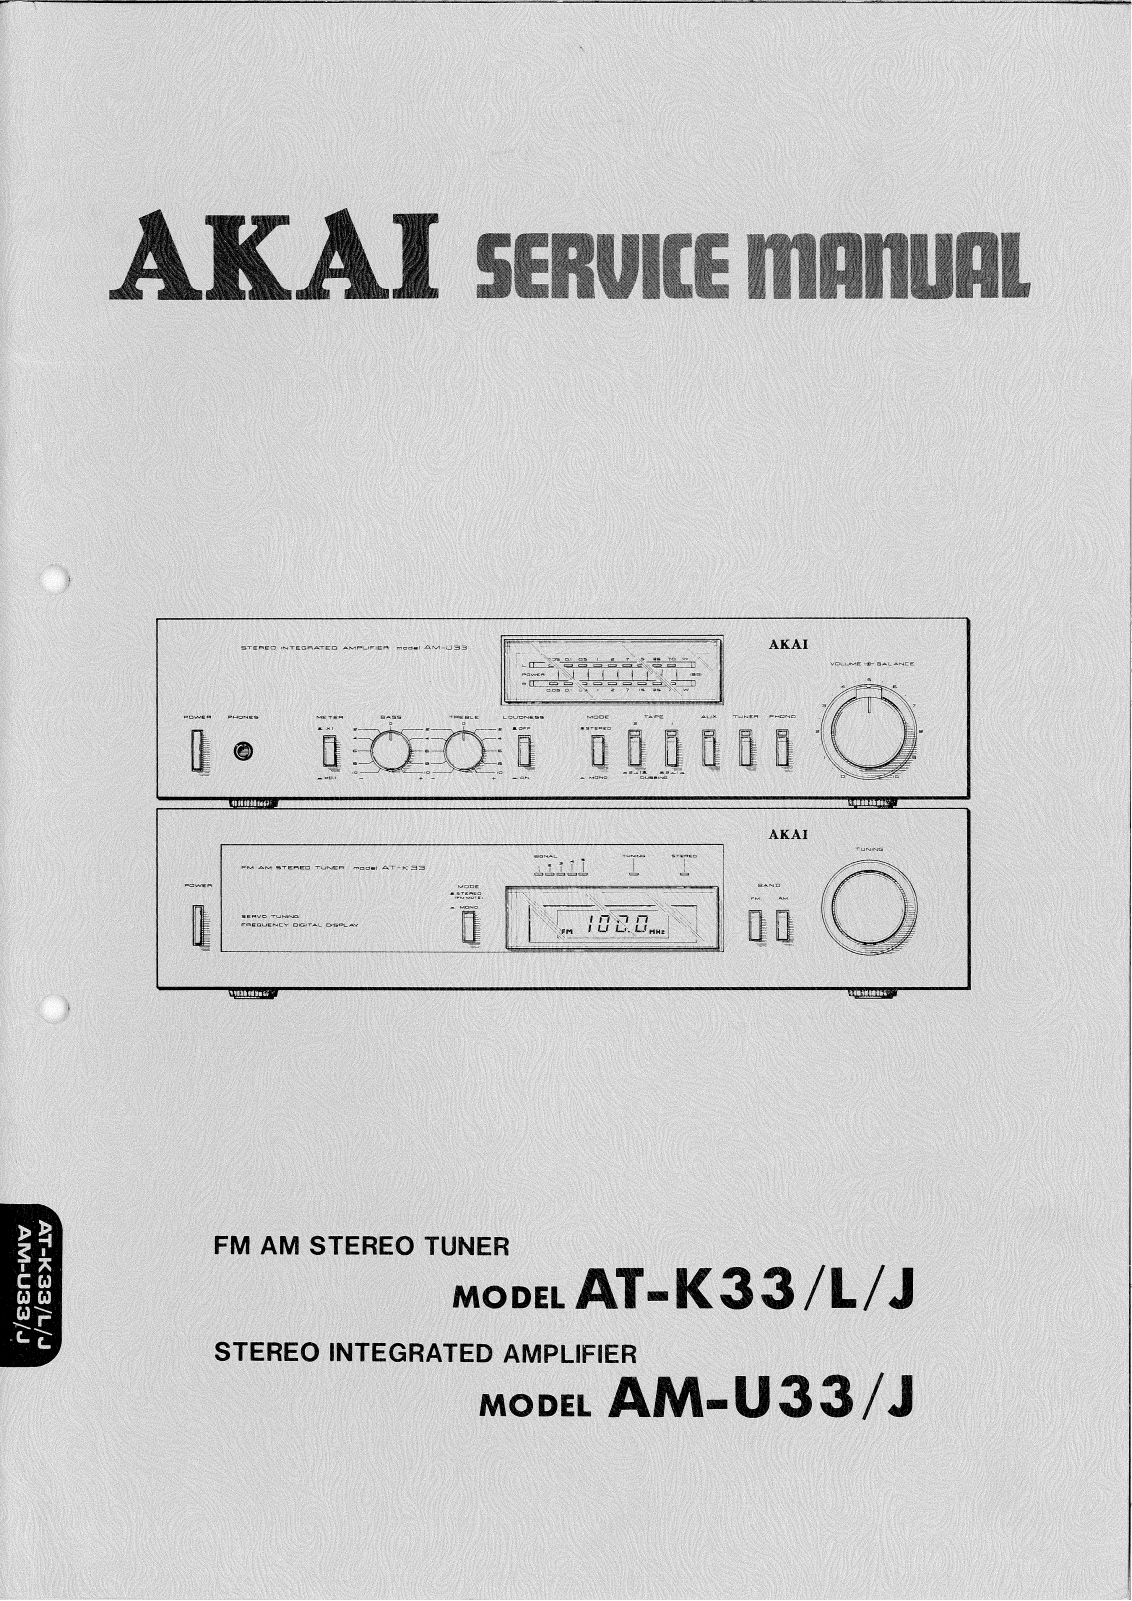 Akai AT-K33, AM-U33 Service Manual